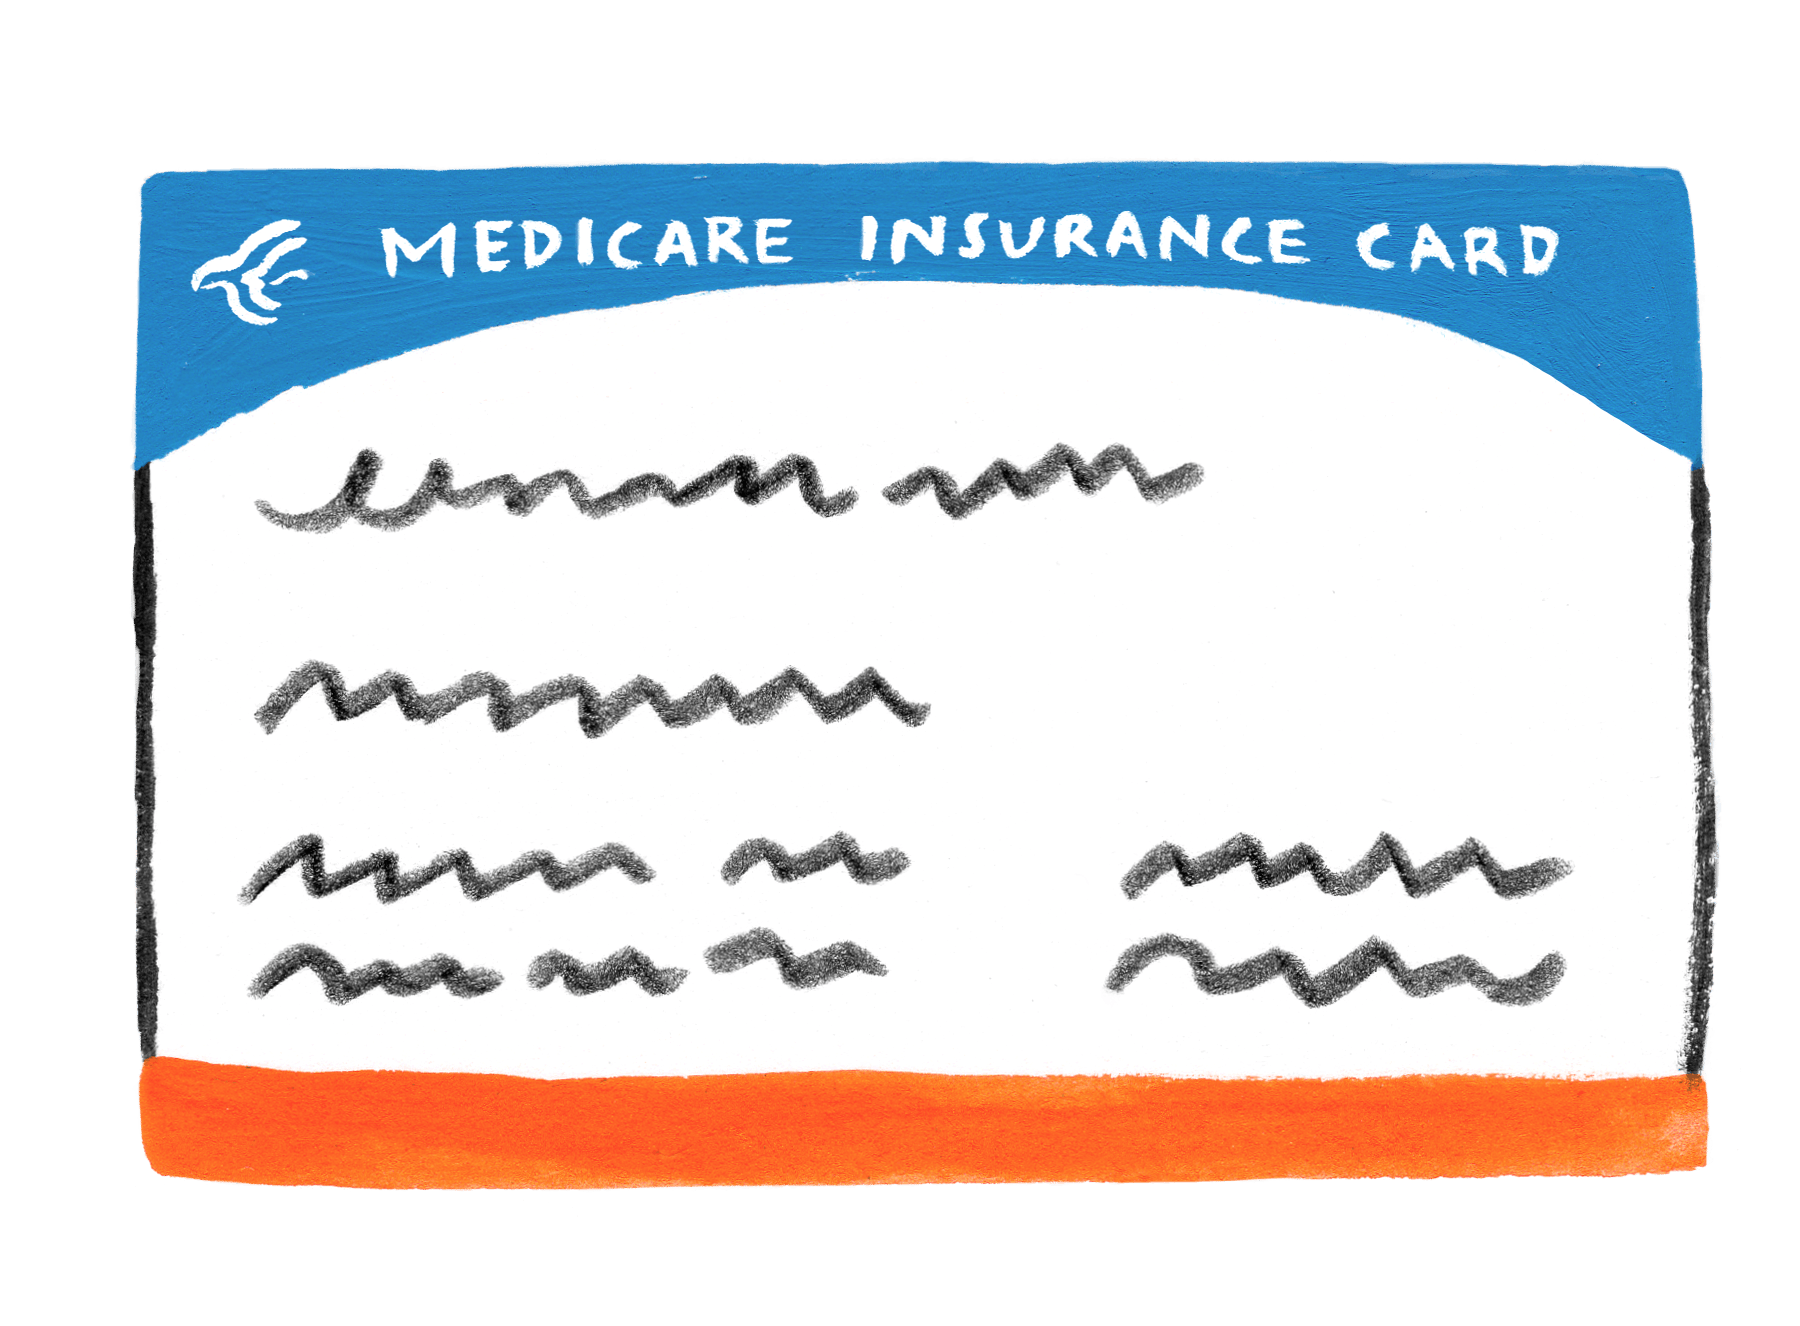 Illustration of a Medicare insurance card.